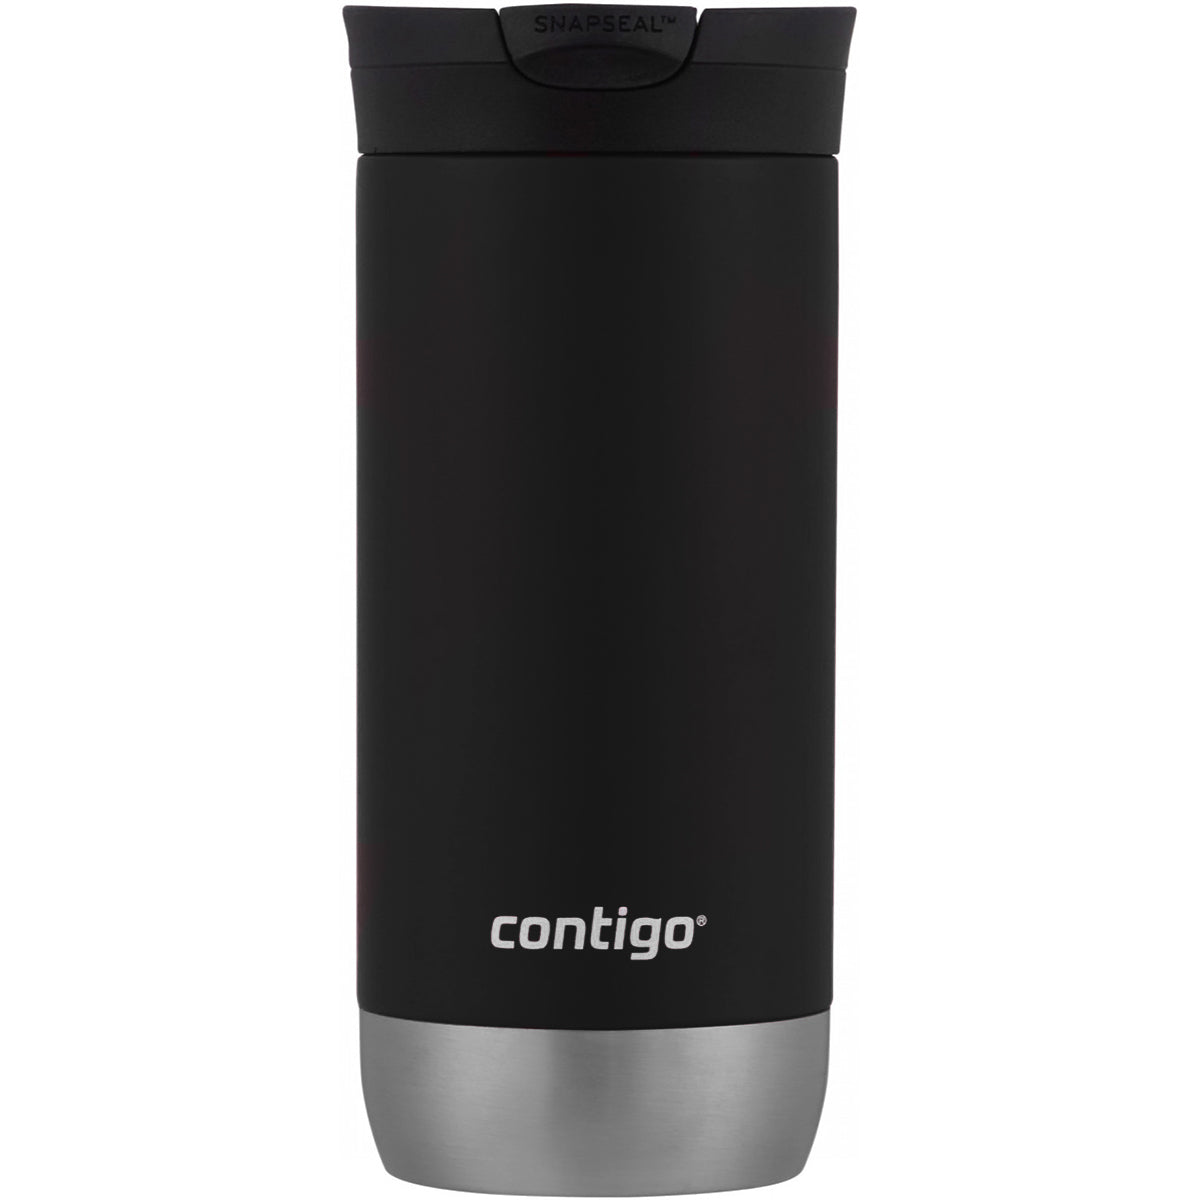 Contigo Huron 2.0 SnapSeal Insulated Stainless Steel Travel Mug Contigo